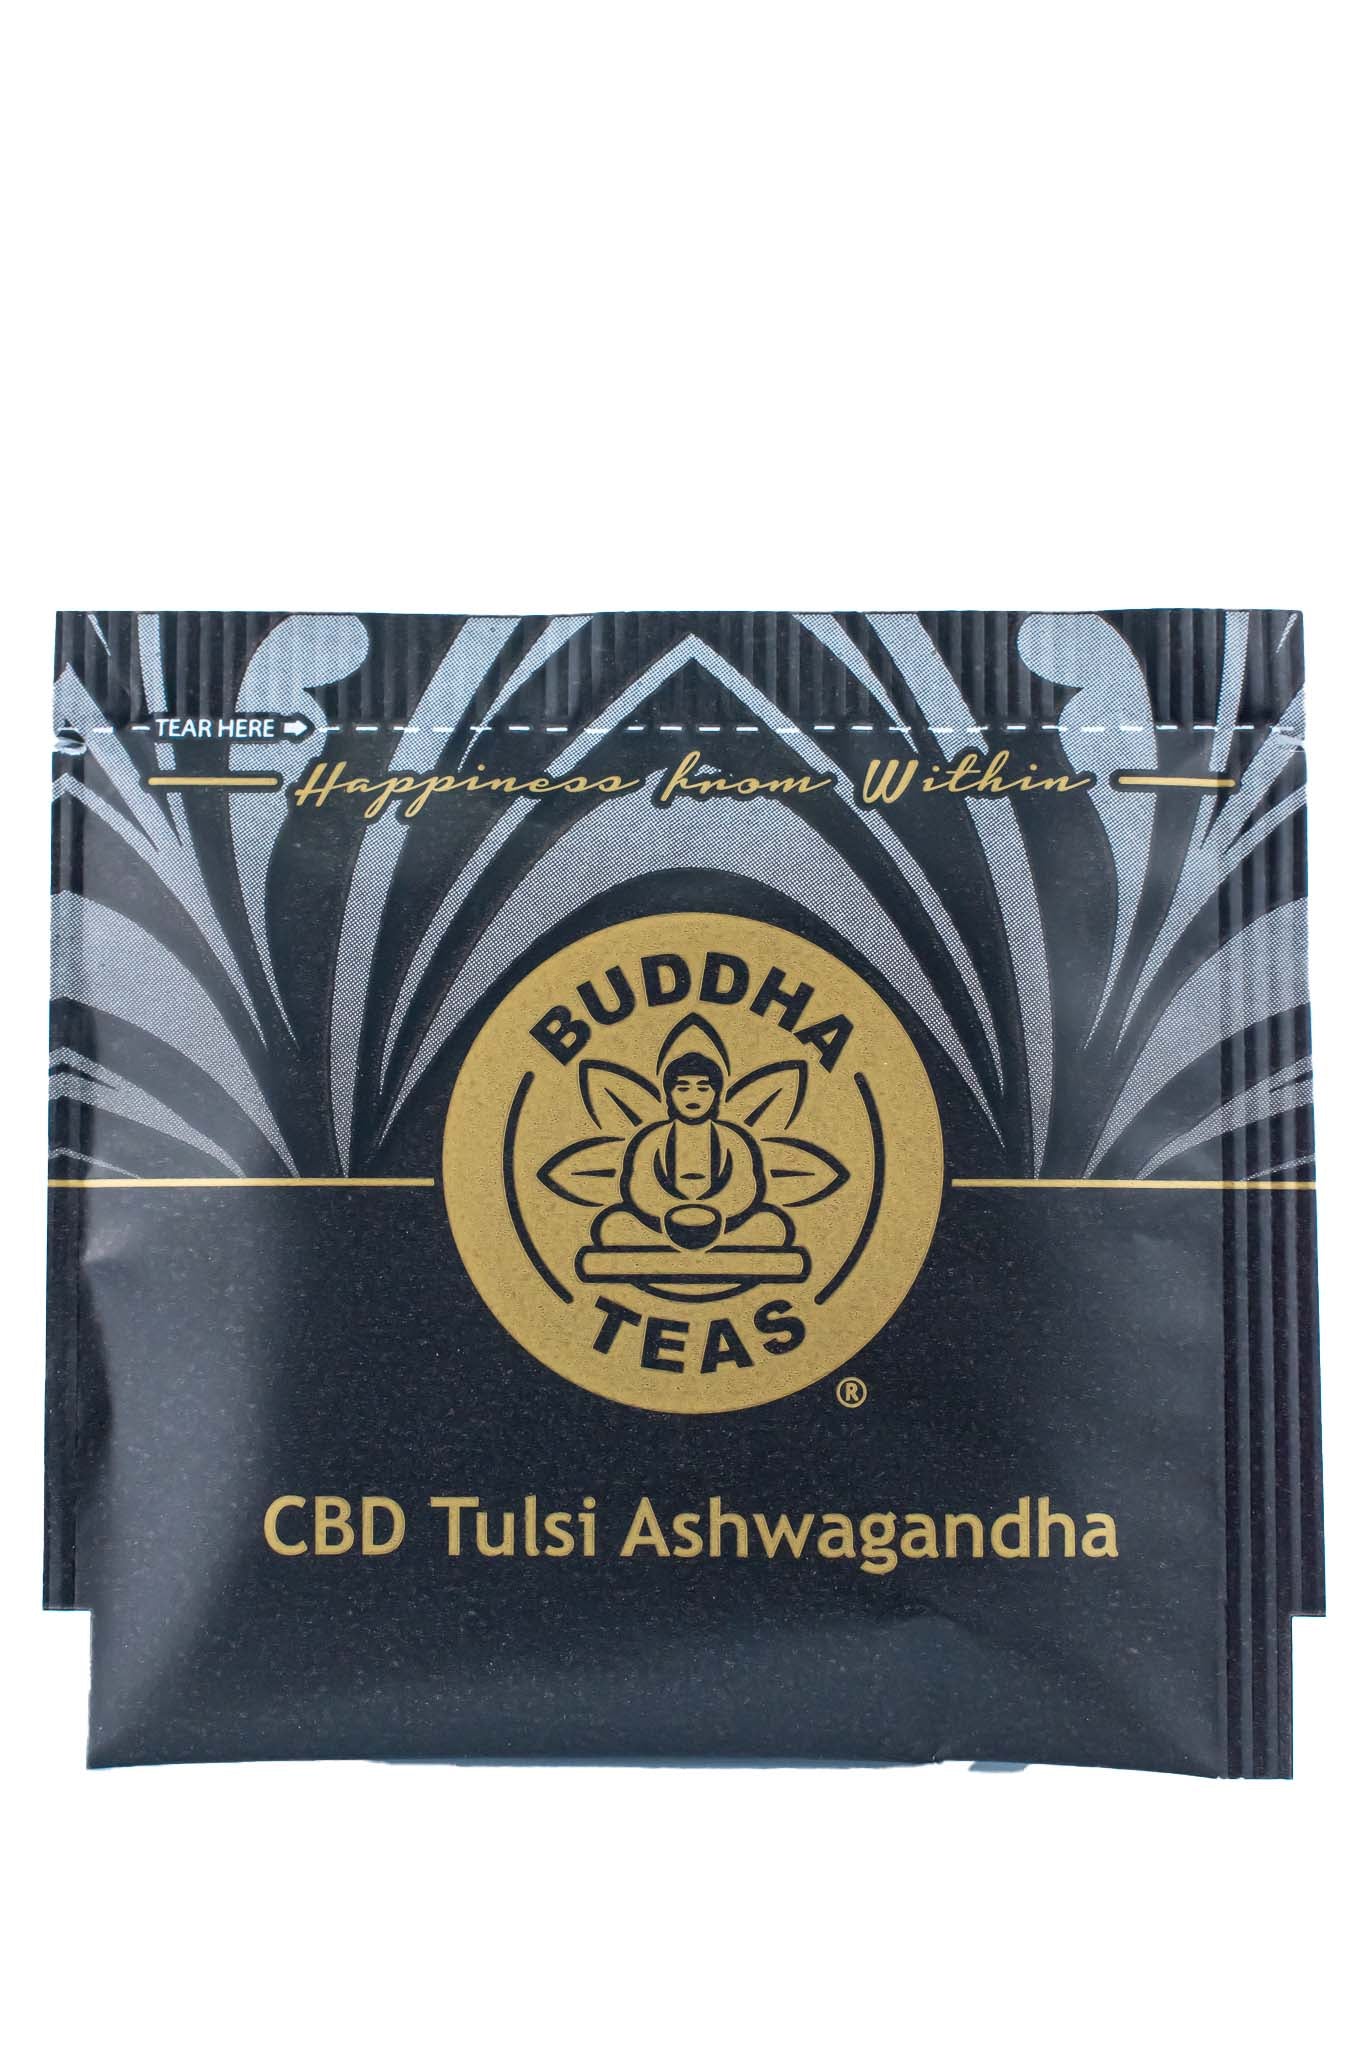 CBD Tulsi Ashwagandha Tea